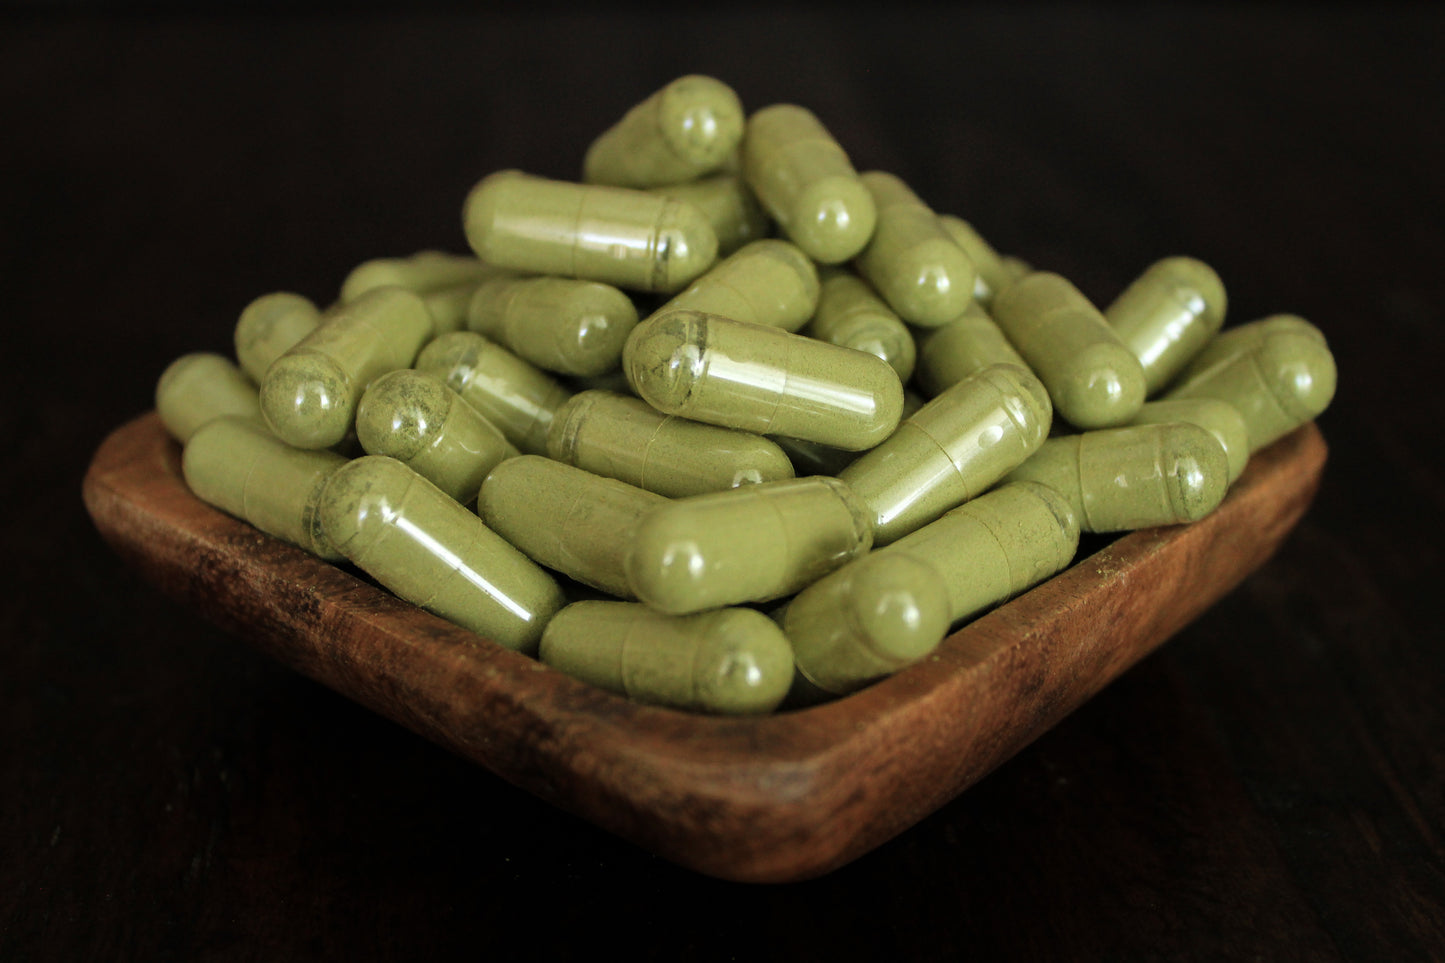 Super green vein kratom capsules